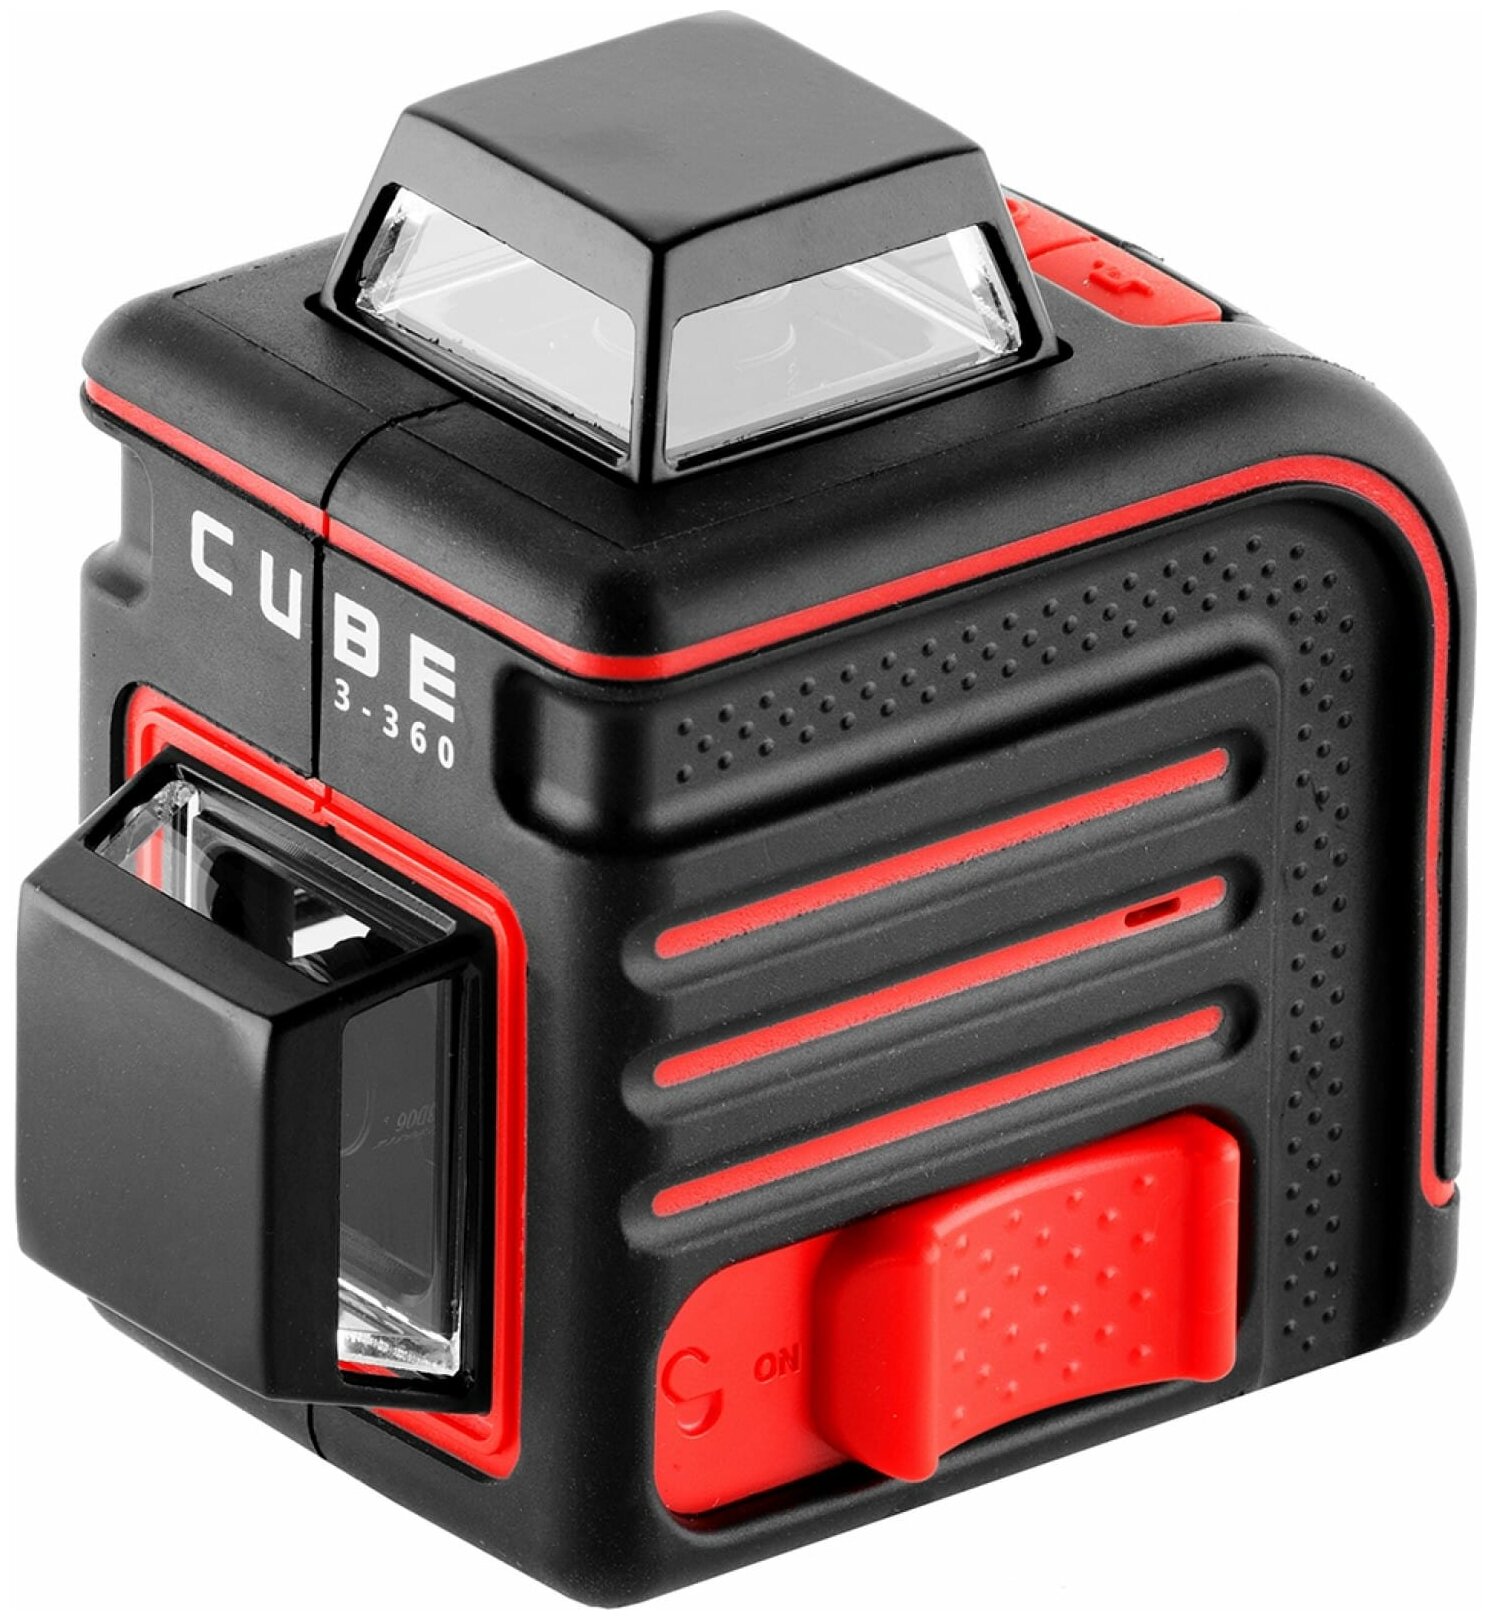 Ada instruments cube. Лазерный уровень ada Cube 3-360 Basic Edition. Лазерный уровень ada Cube 3-360 professional Edition а00572. Ada Cube 3-360 Basic Edition а00559. Лазерный уровень ada Cube 3-360 Home Edition а00565.